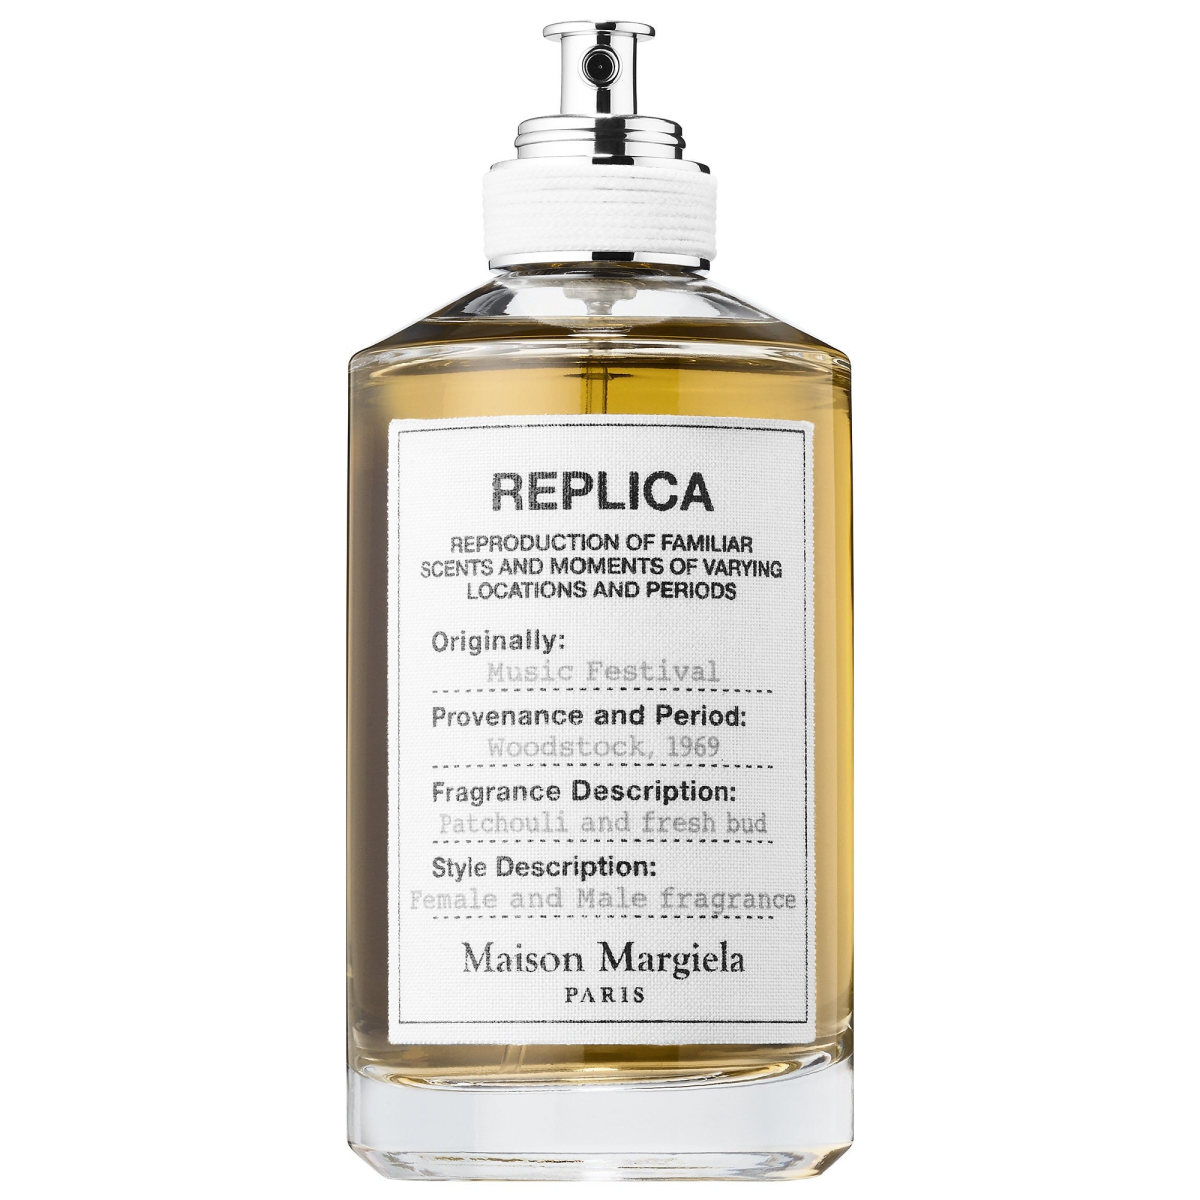 Maison Margiela Replica Music Festival Perfume Fragrance Review ...